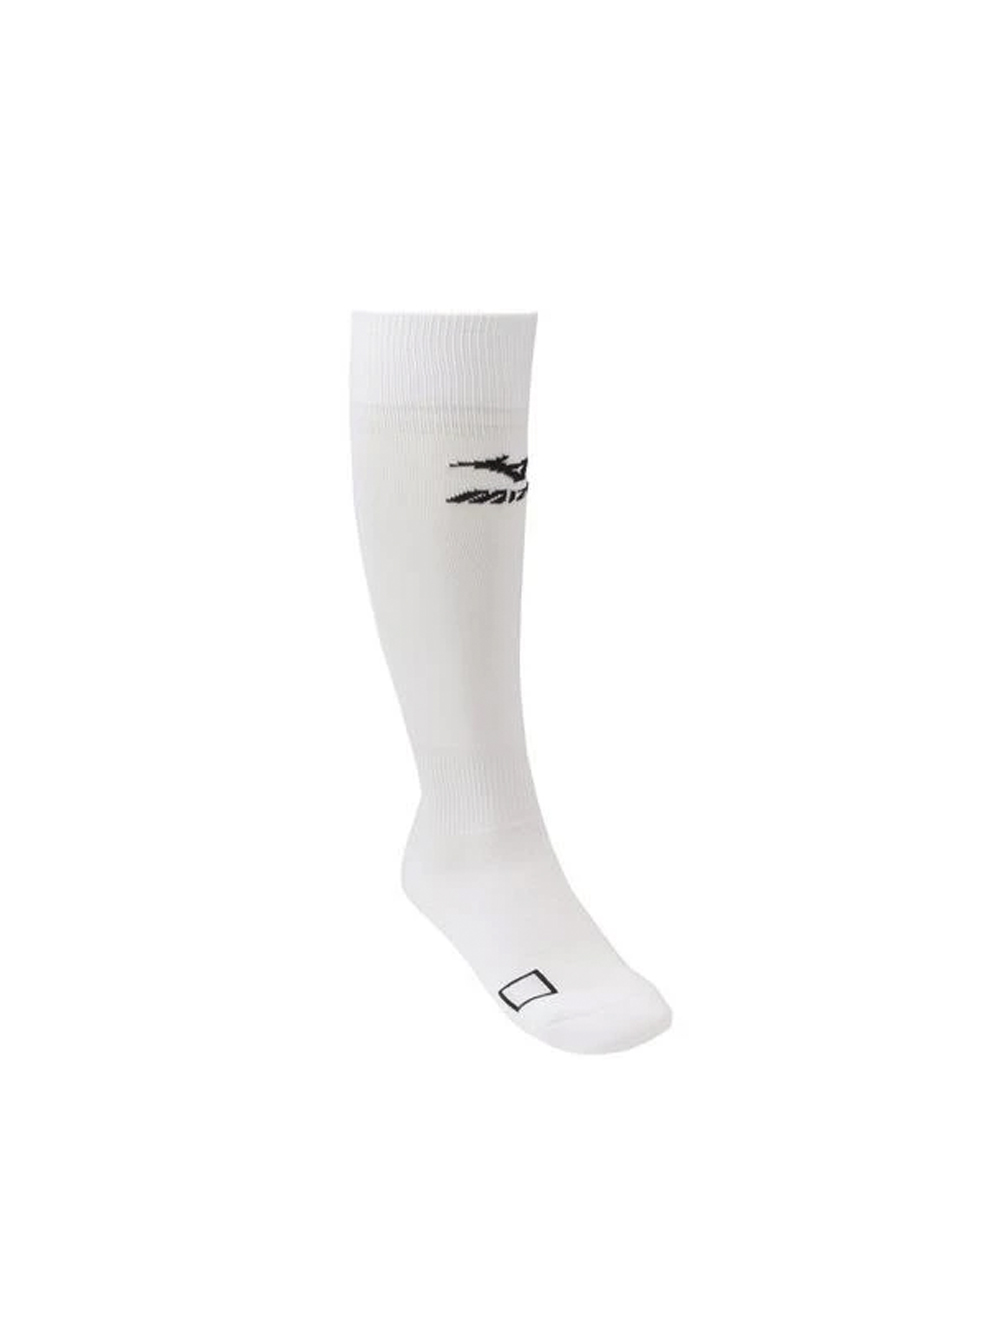 mizuno white socks